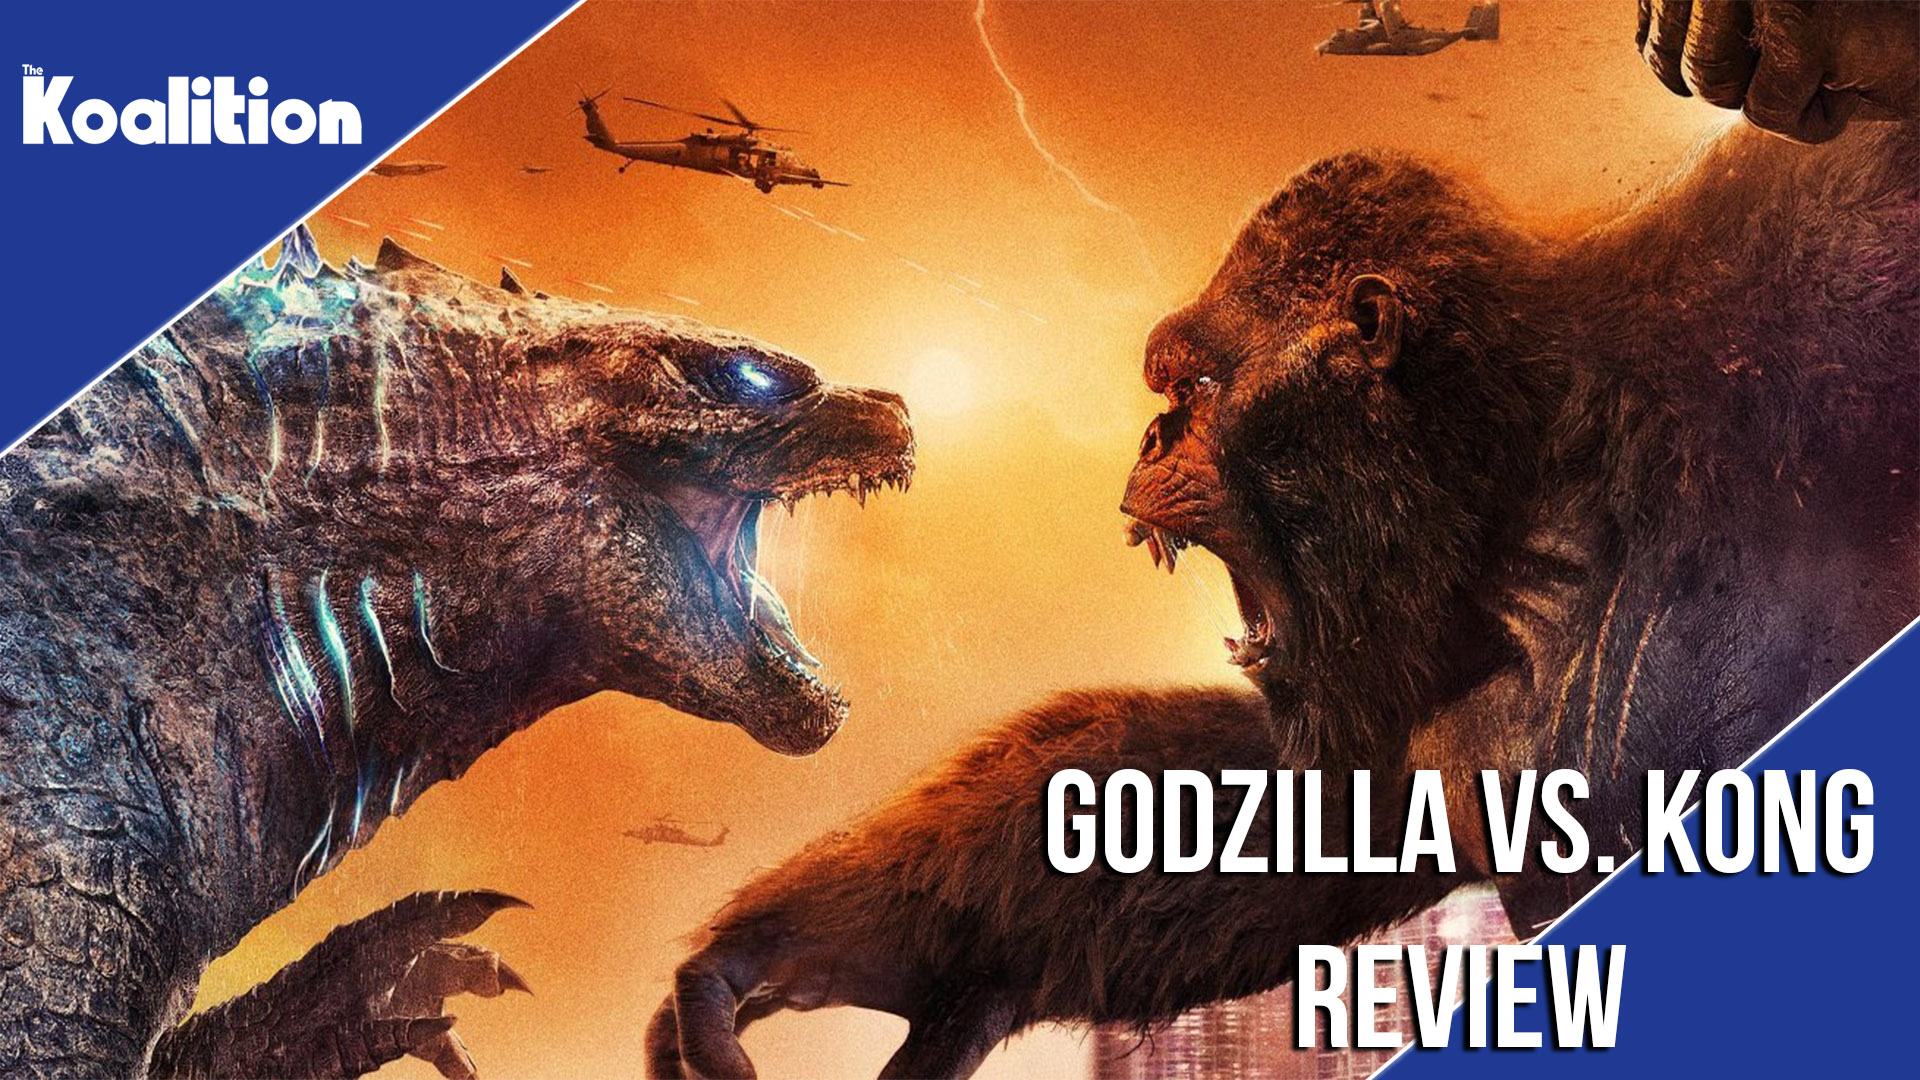 Godzilla vs. Kong Review - The Koalition